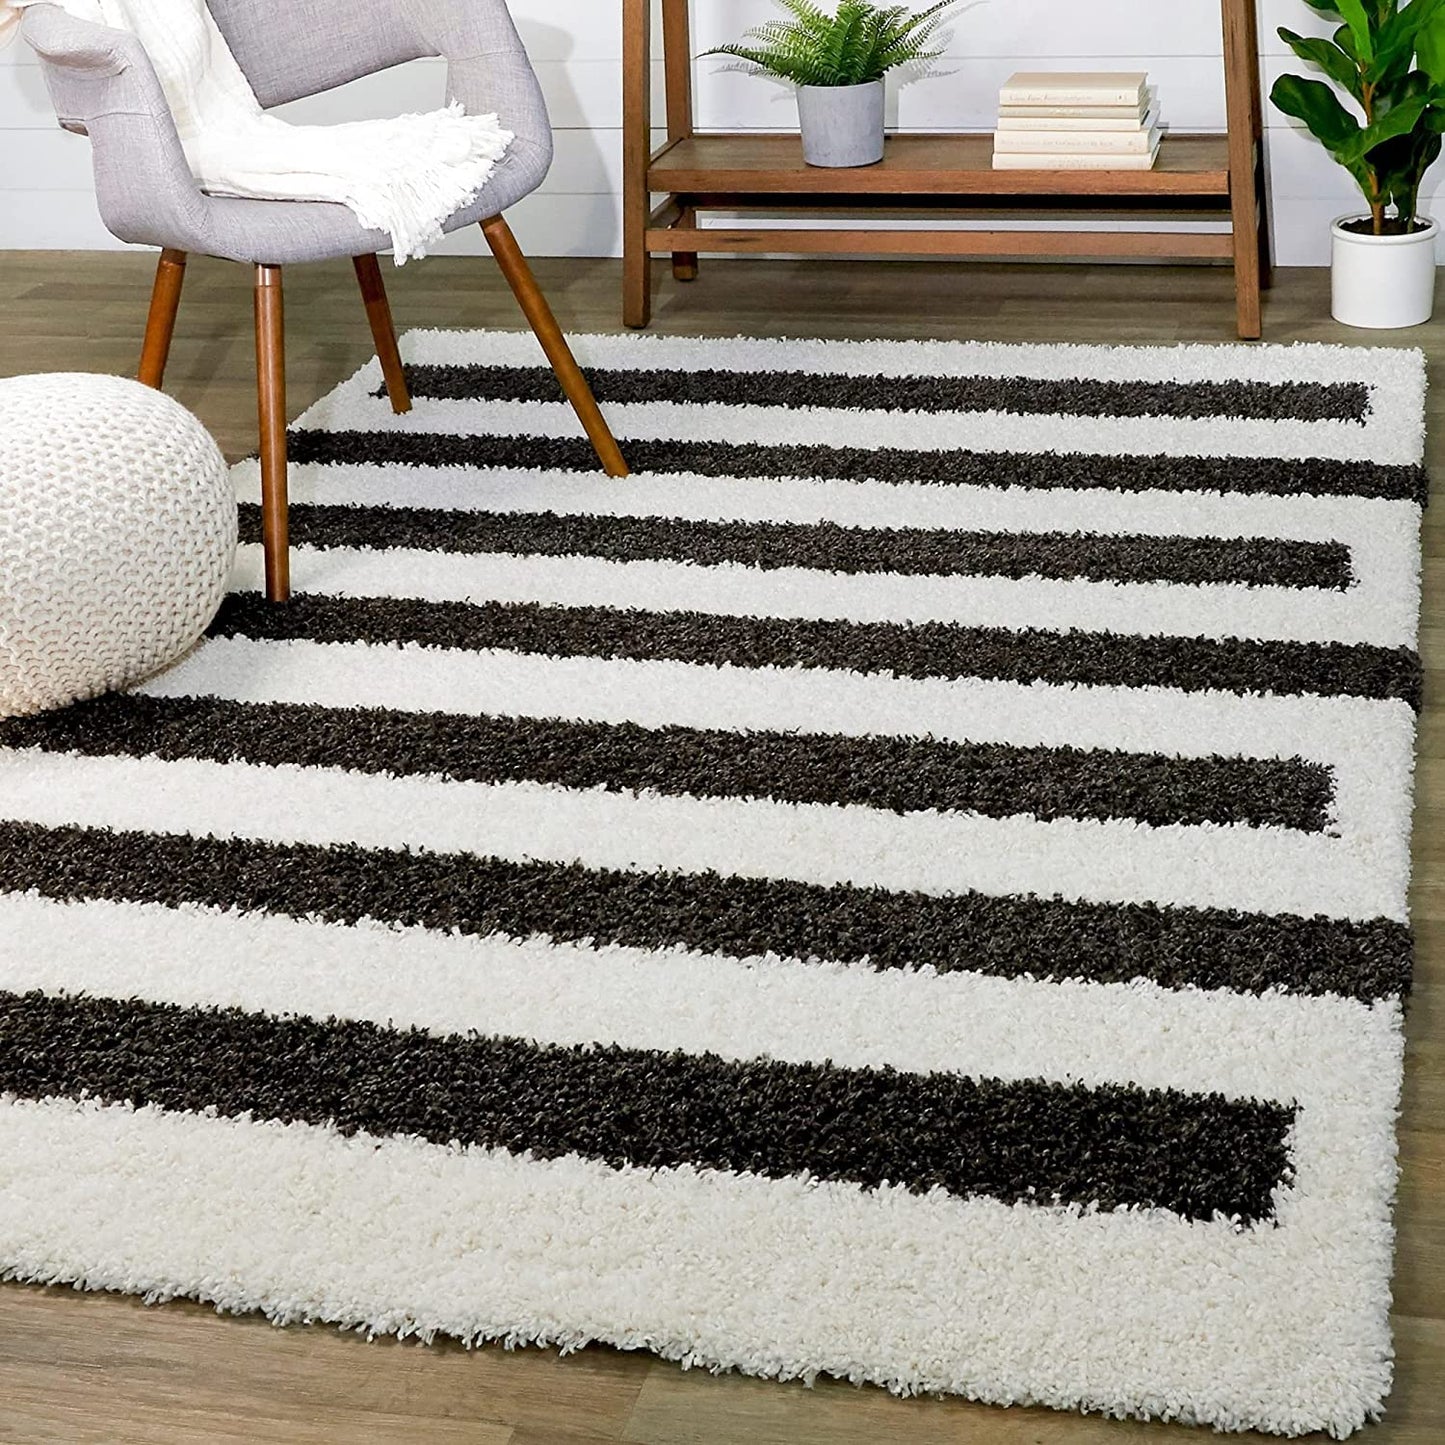 Kashyapa Rugs Collection - Handmade Microfiber Carpet for Living Room Bedroom Hall & Home - Black & Ivory